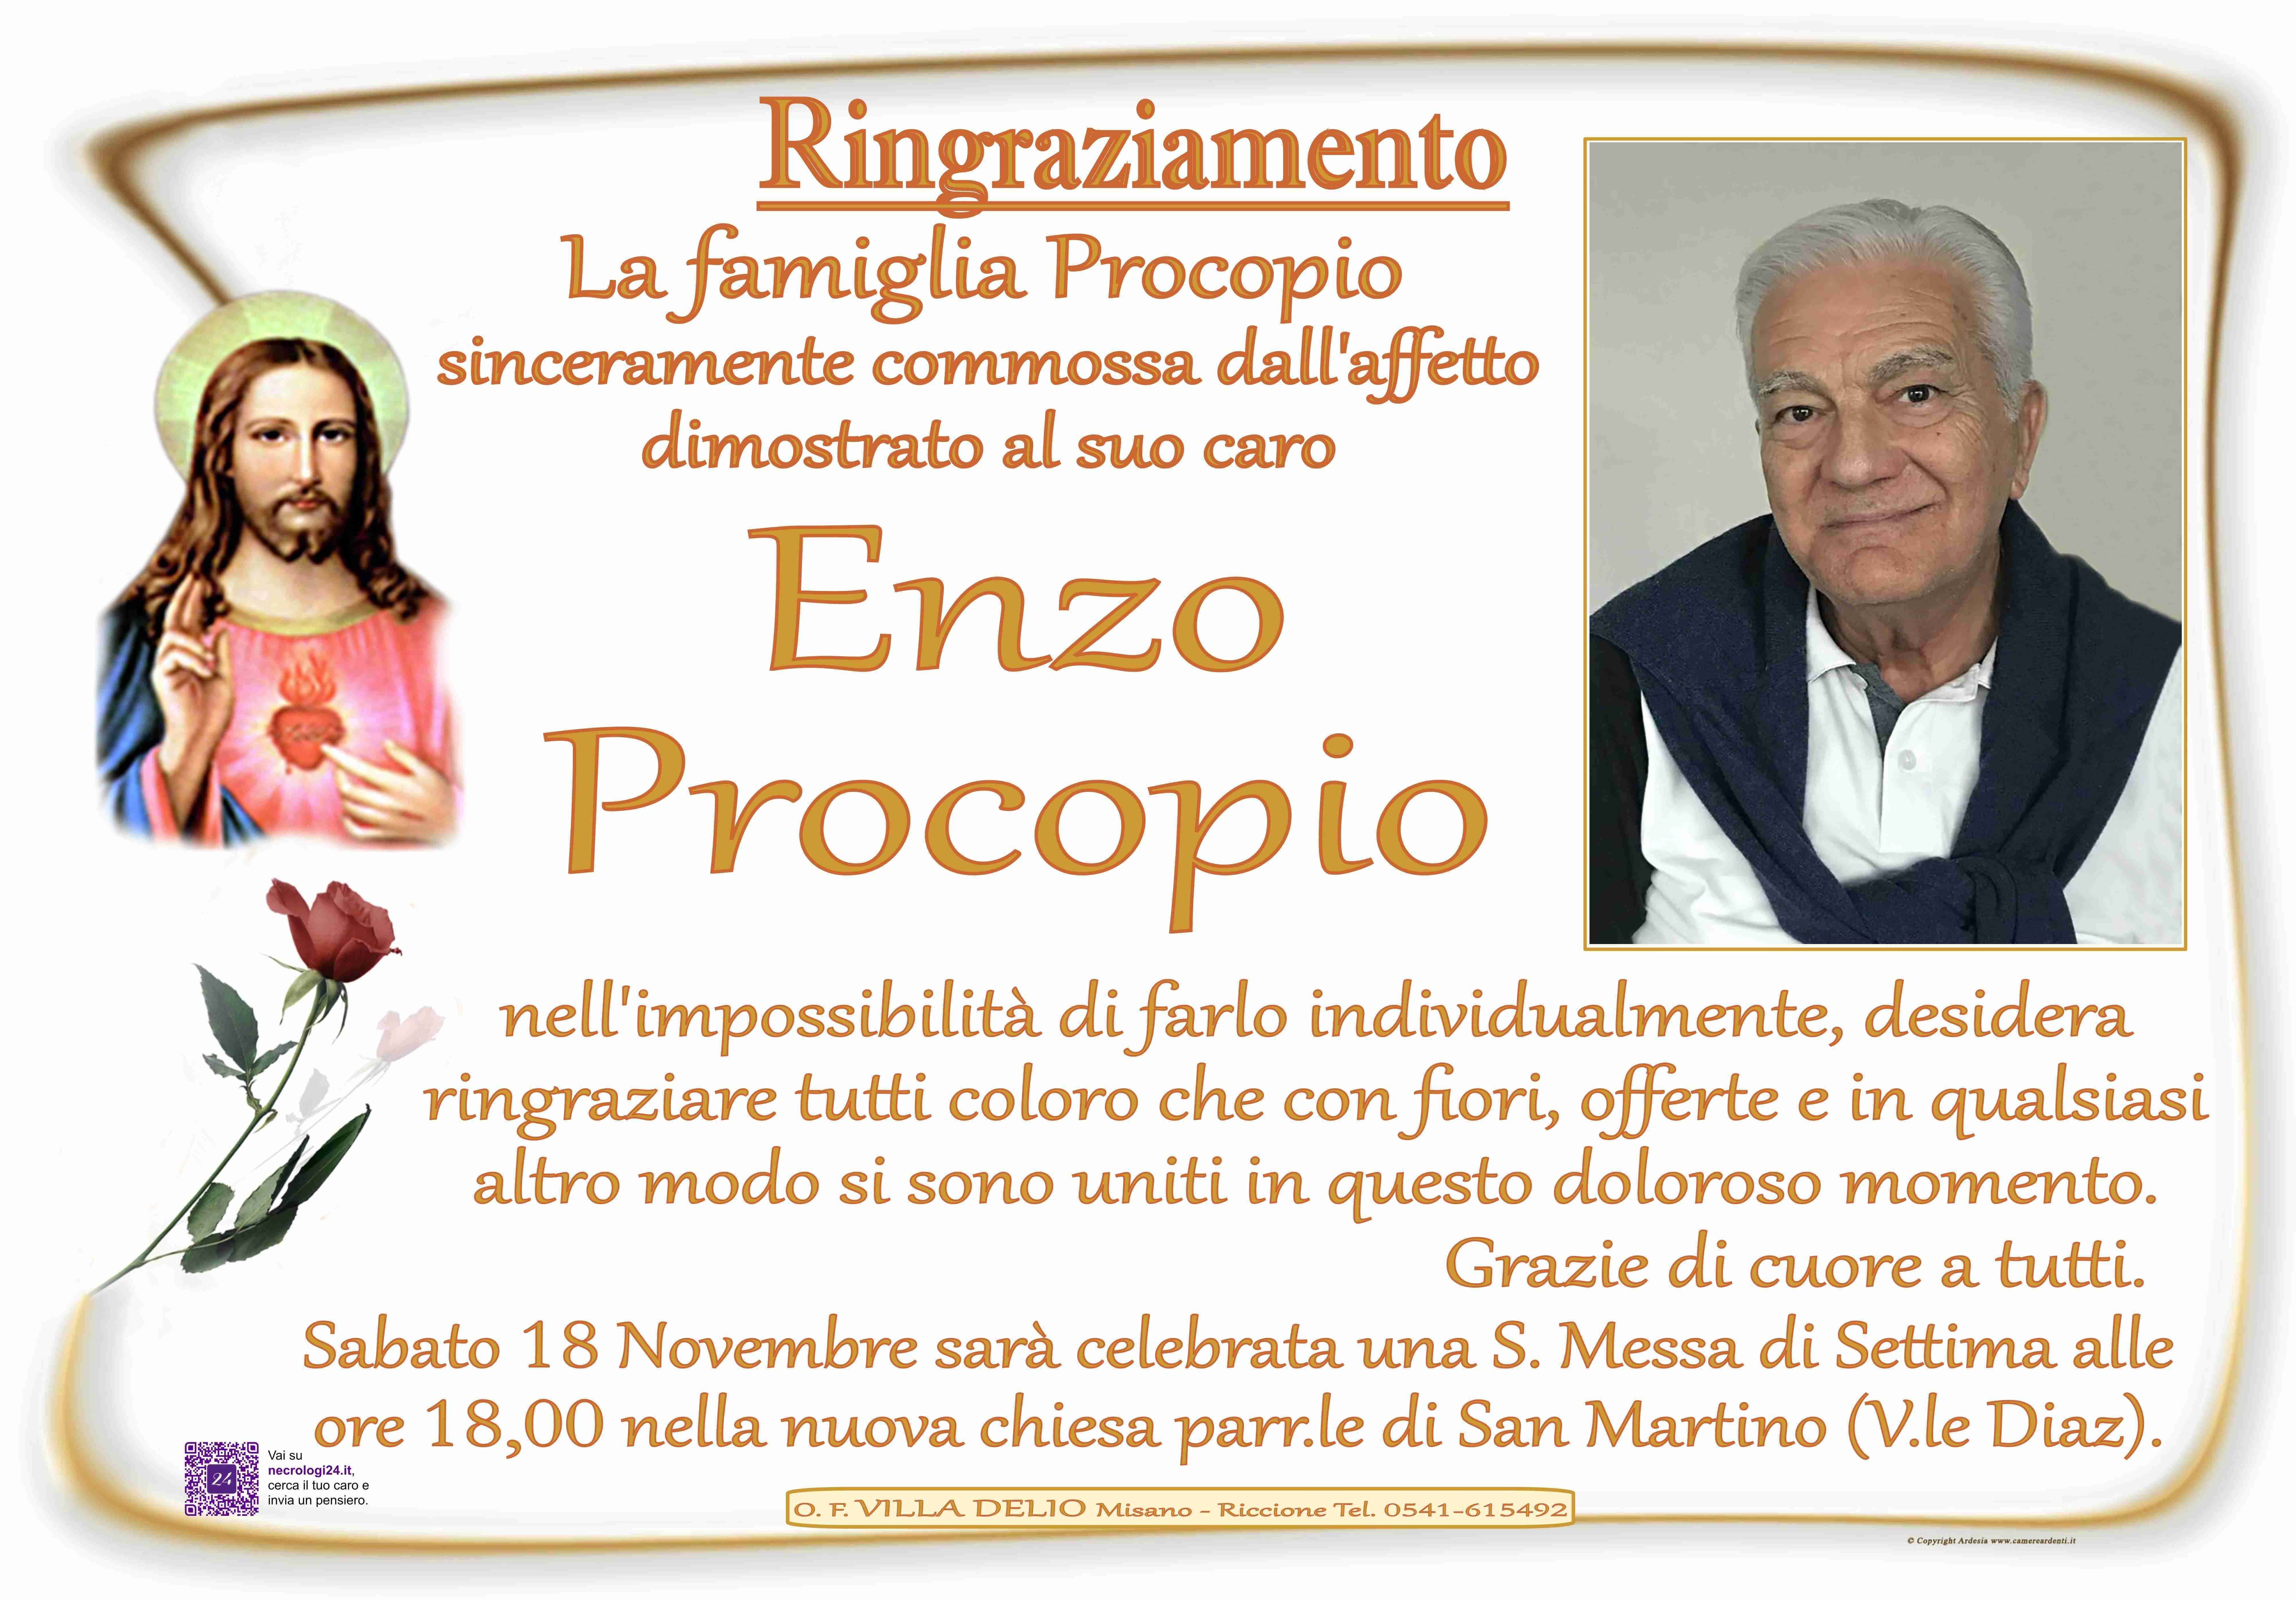 Enzo Procopio